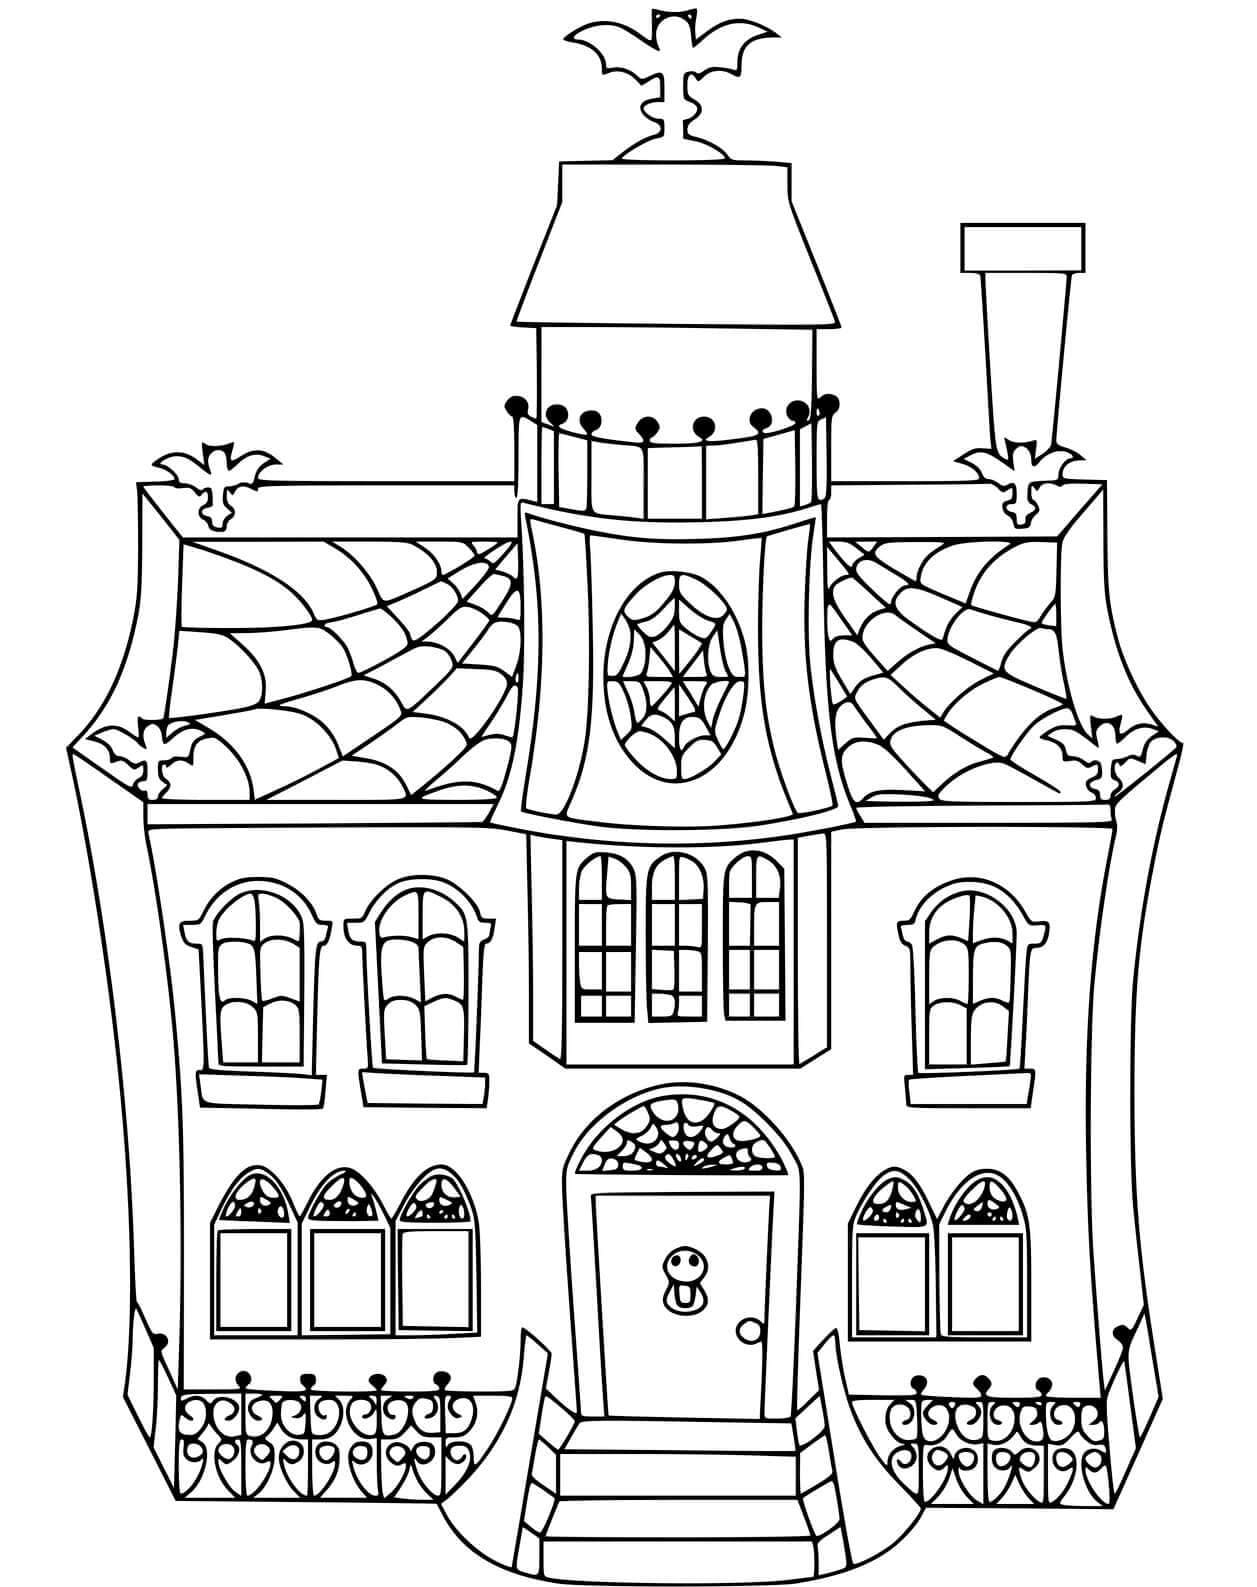 Fabulosa Casa De Los Vampiros. de vampirina